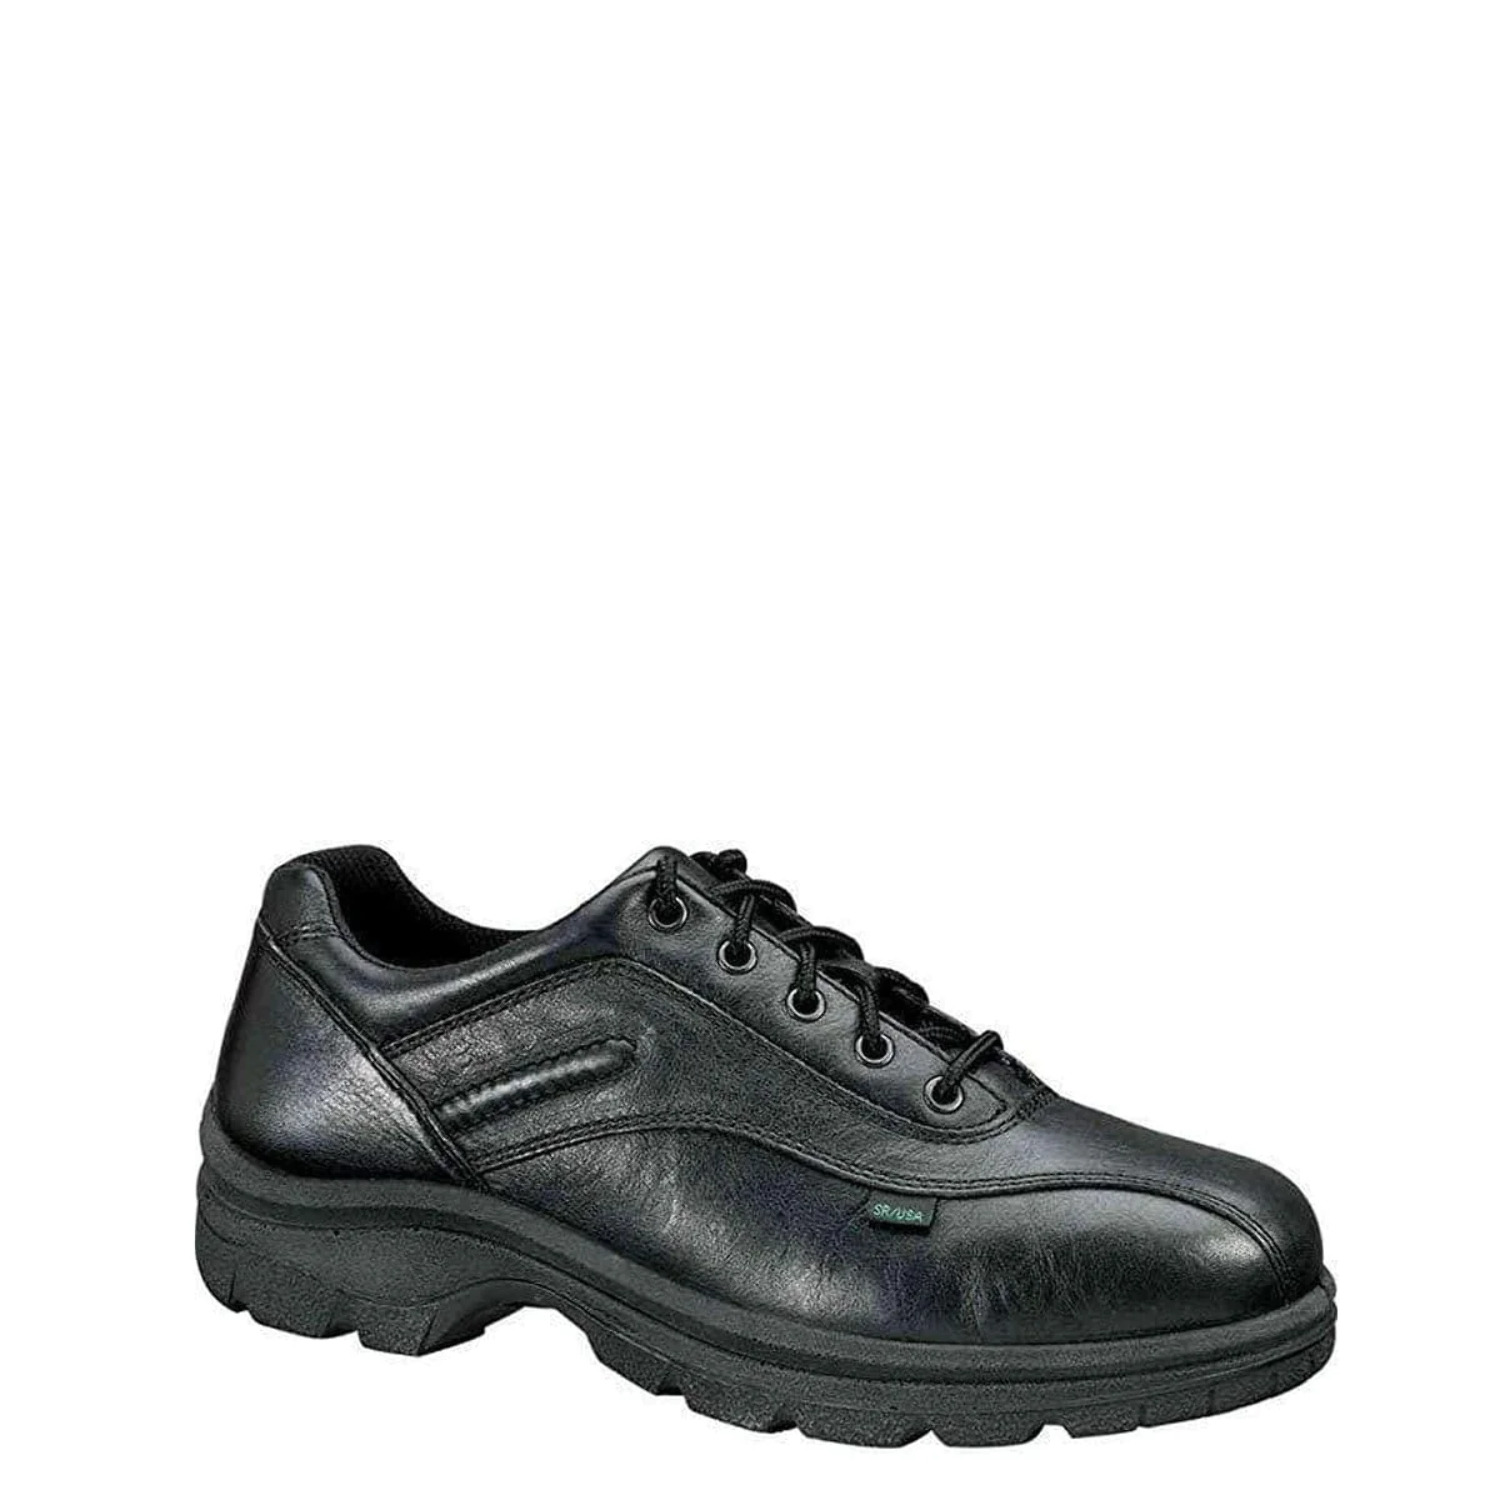 Thorogood Men's Black Safety Toe Double Track Oxford Uniform Shoes, 804-6908 - image 1 of 1